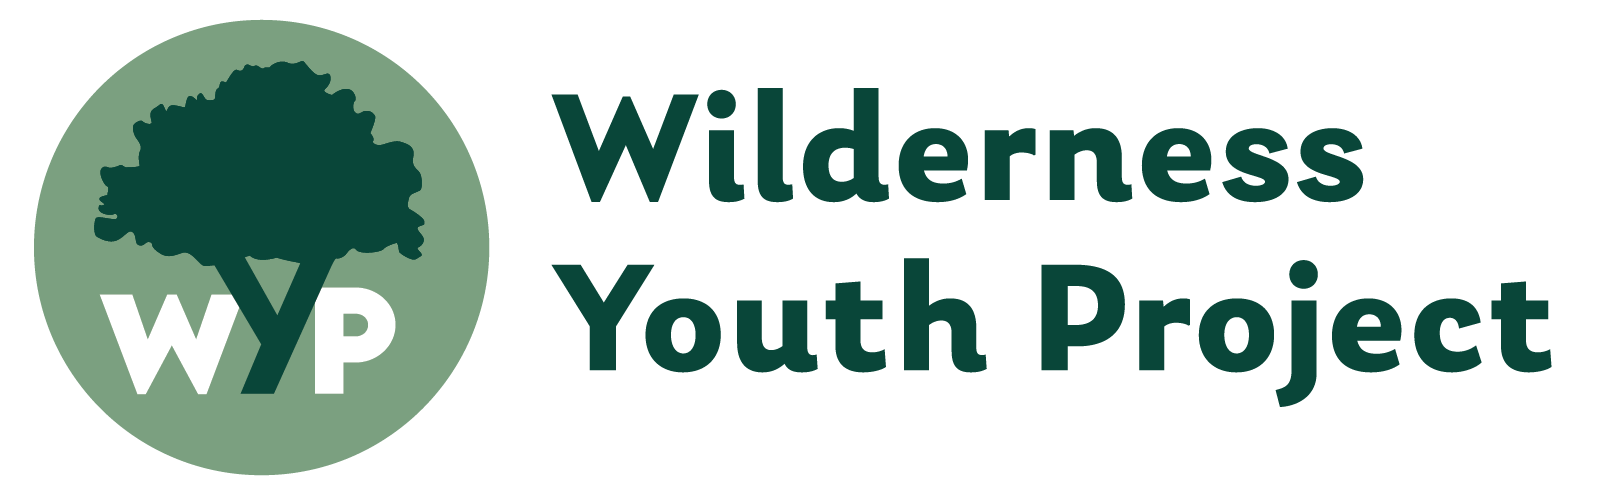 Wilderness Jeugd Project Logo